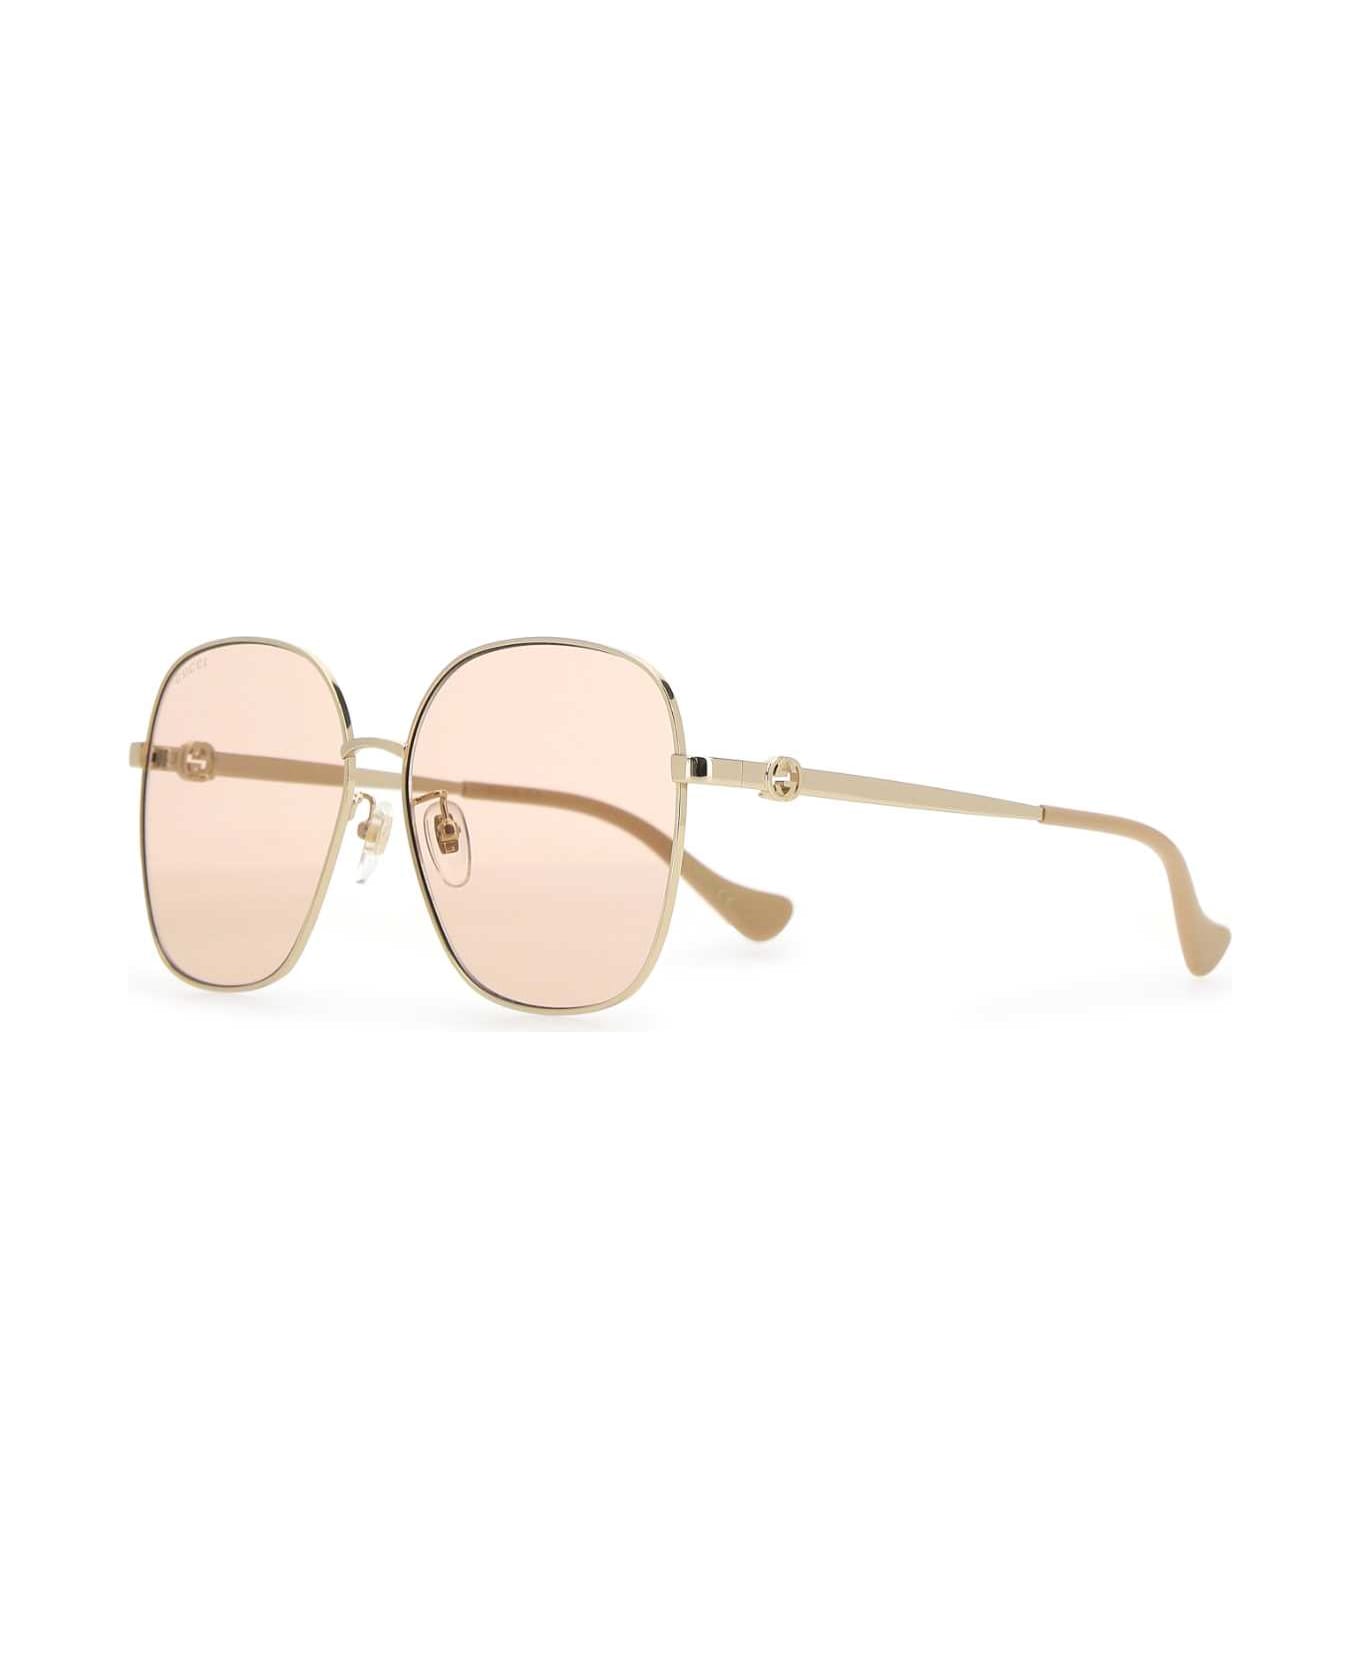 Gucci Gold Metal Sunglasses - 8059